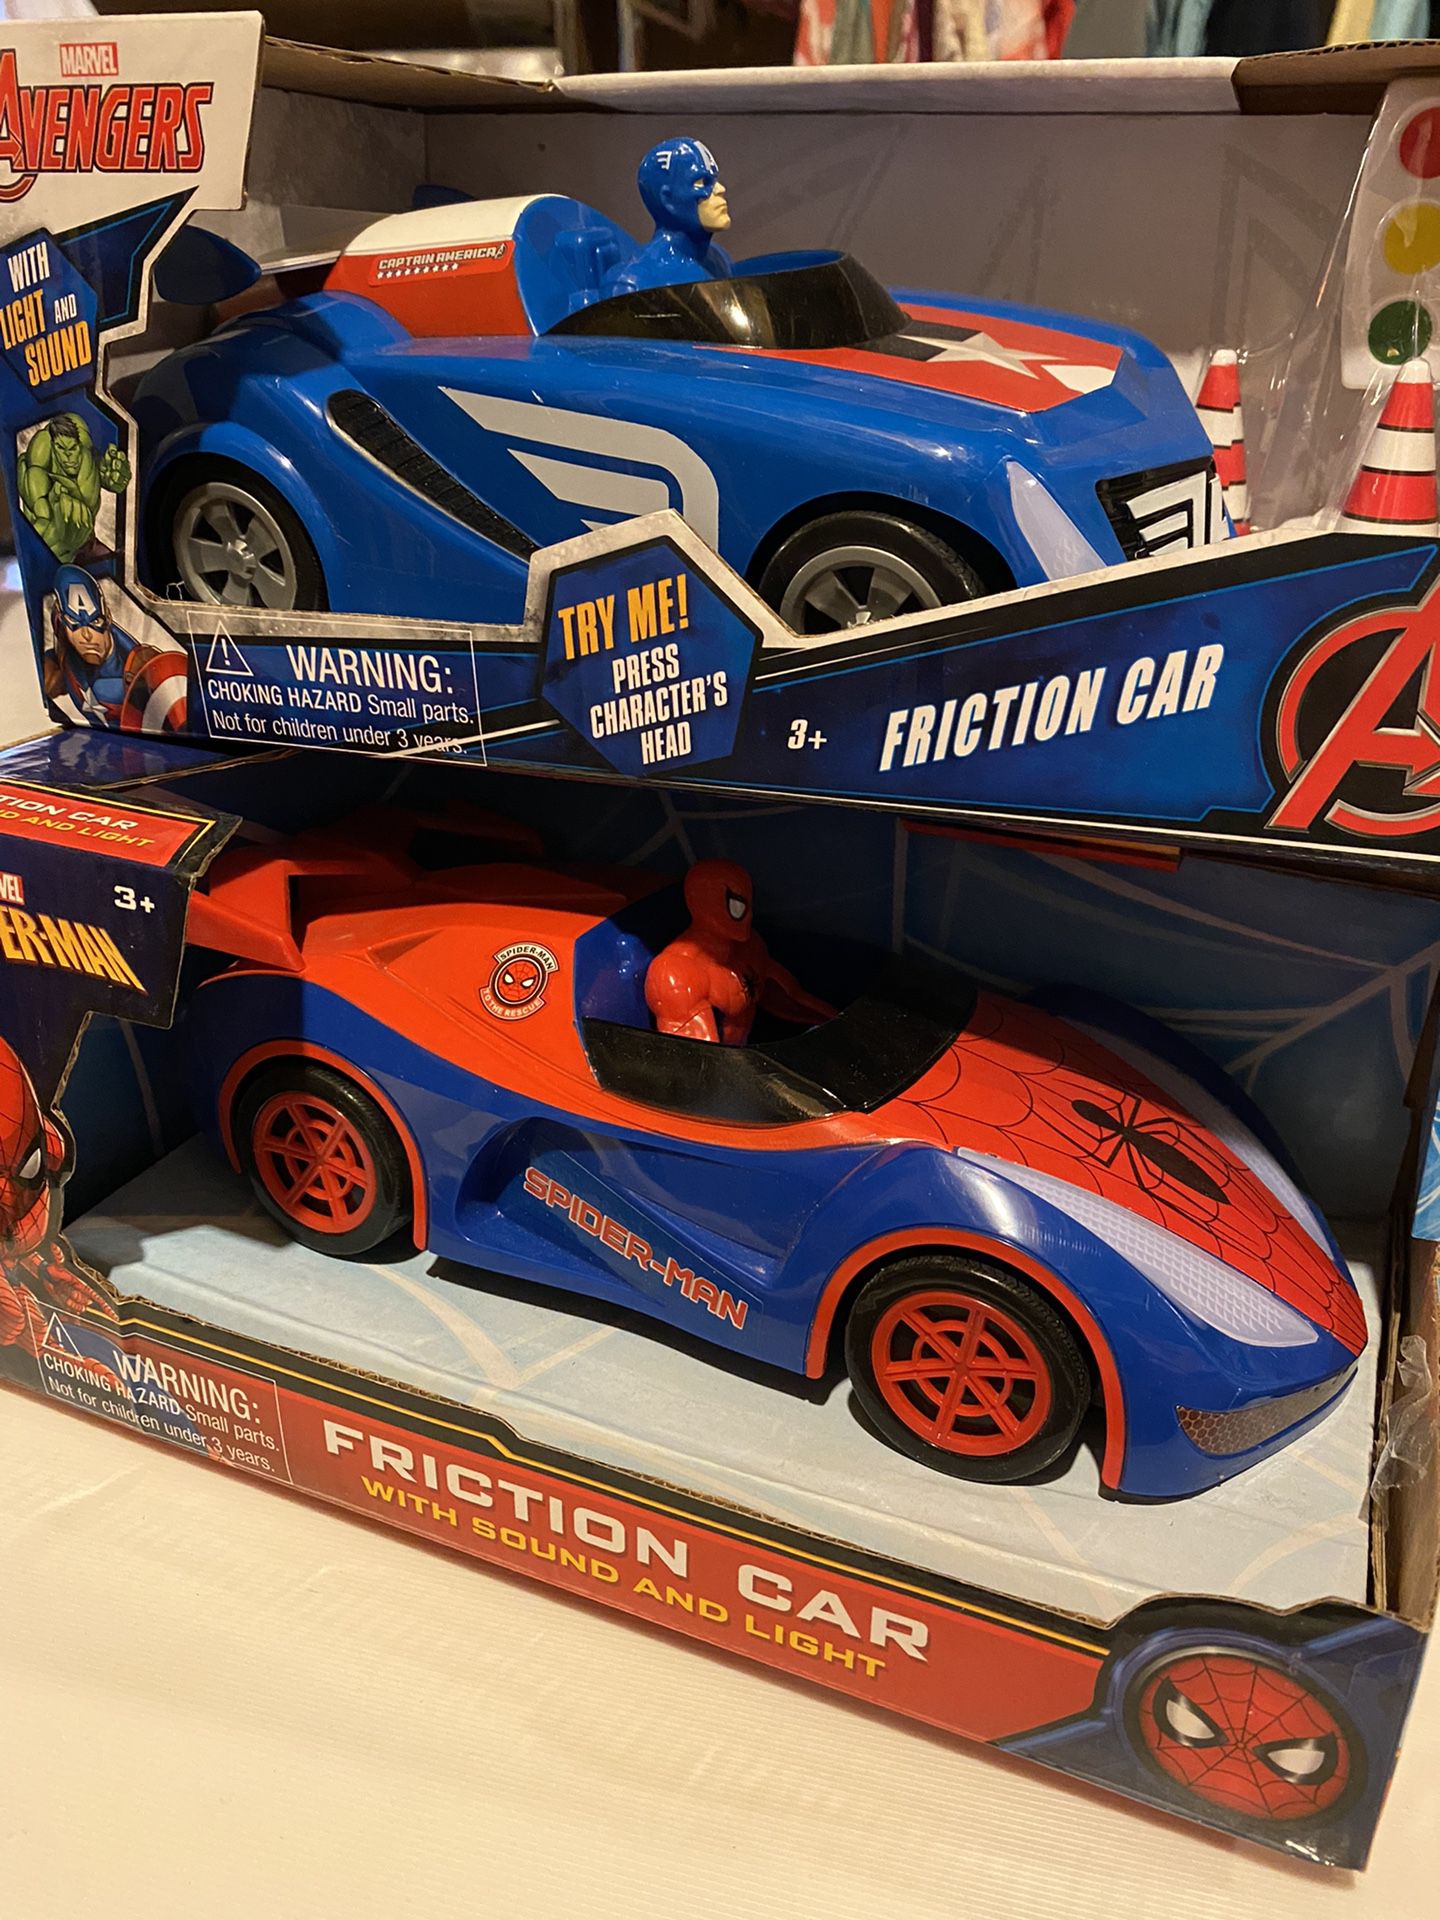 Spider Man/Avengers Cars